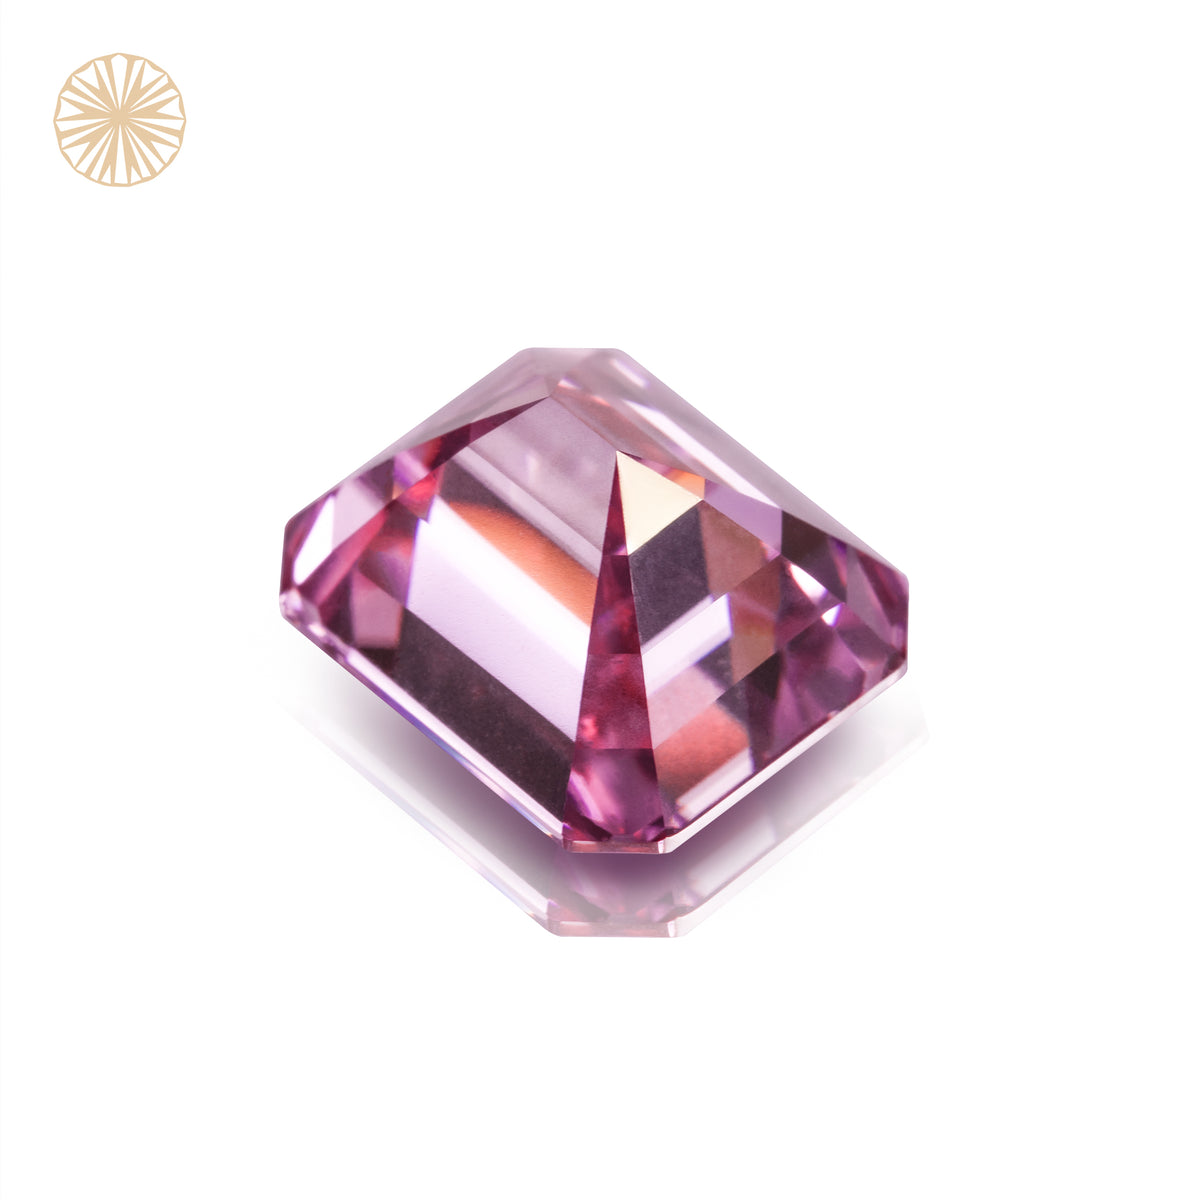 Pink Lotus Emerald Cut Moissanite Diamond Loose Stones GRA Certified Vivid Pink Moissanite Gemstones All Sizes Fancy Cut for Jewelry Making